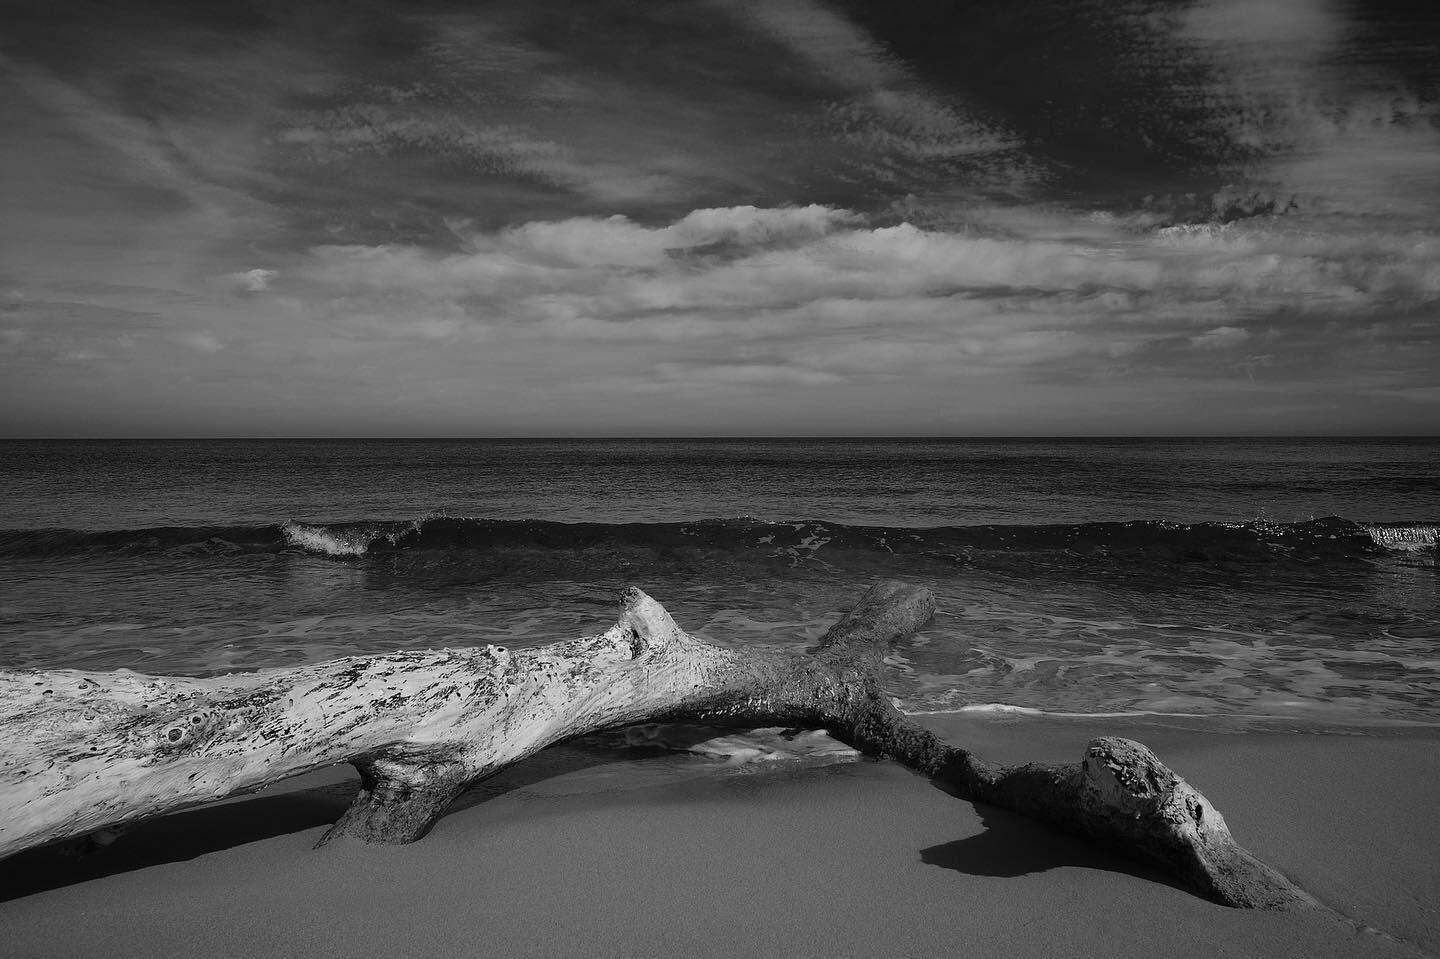 Stranded&hellip;
#ibiza #driftwood #lifecycle